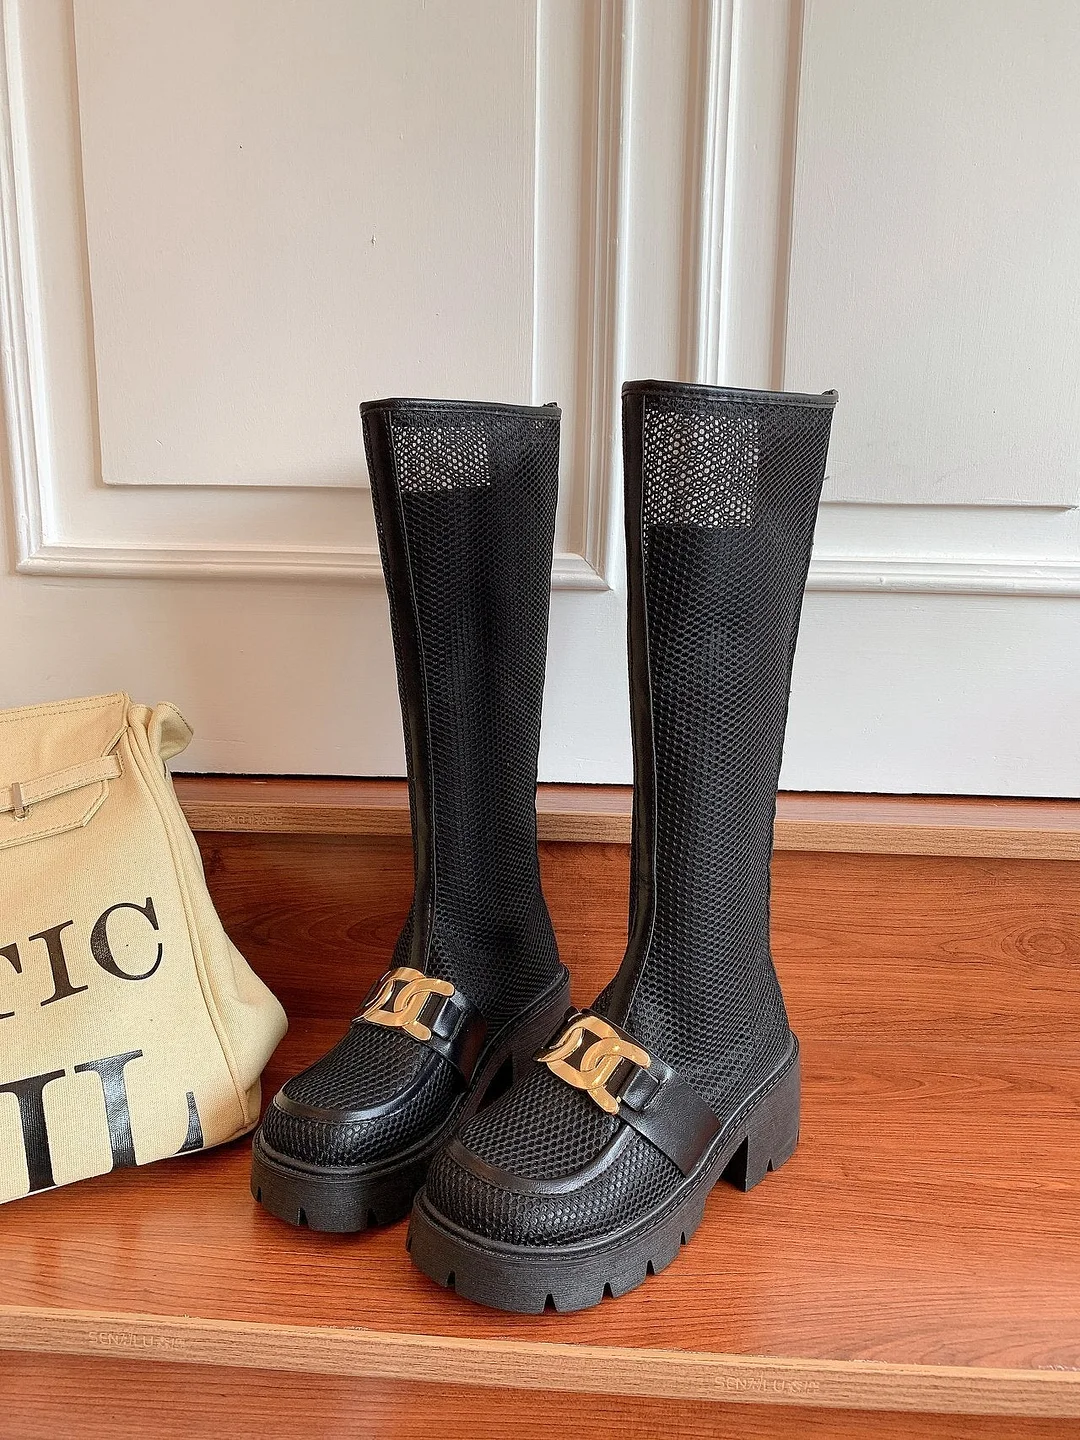 High Knee Cool Boots Sandals Women 2021 New 6.5cm Hihg Heels Rome Mesh Breathable Zipper Sandals Ladies Paltform Sandals Shoes